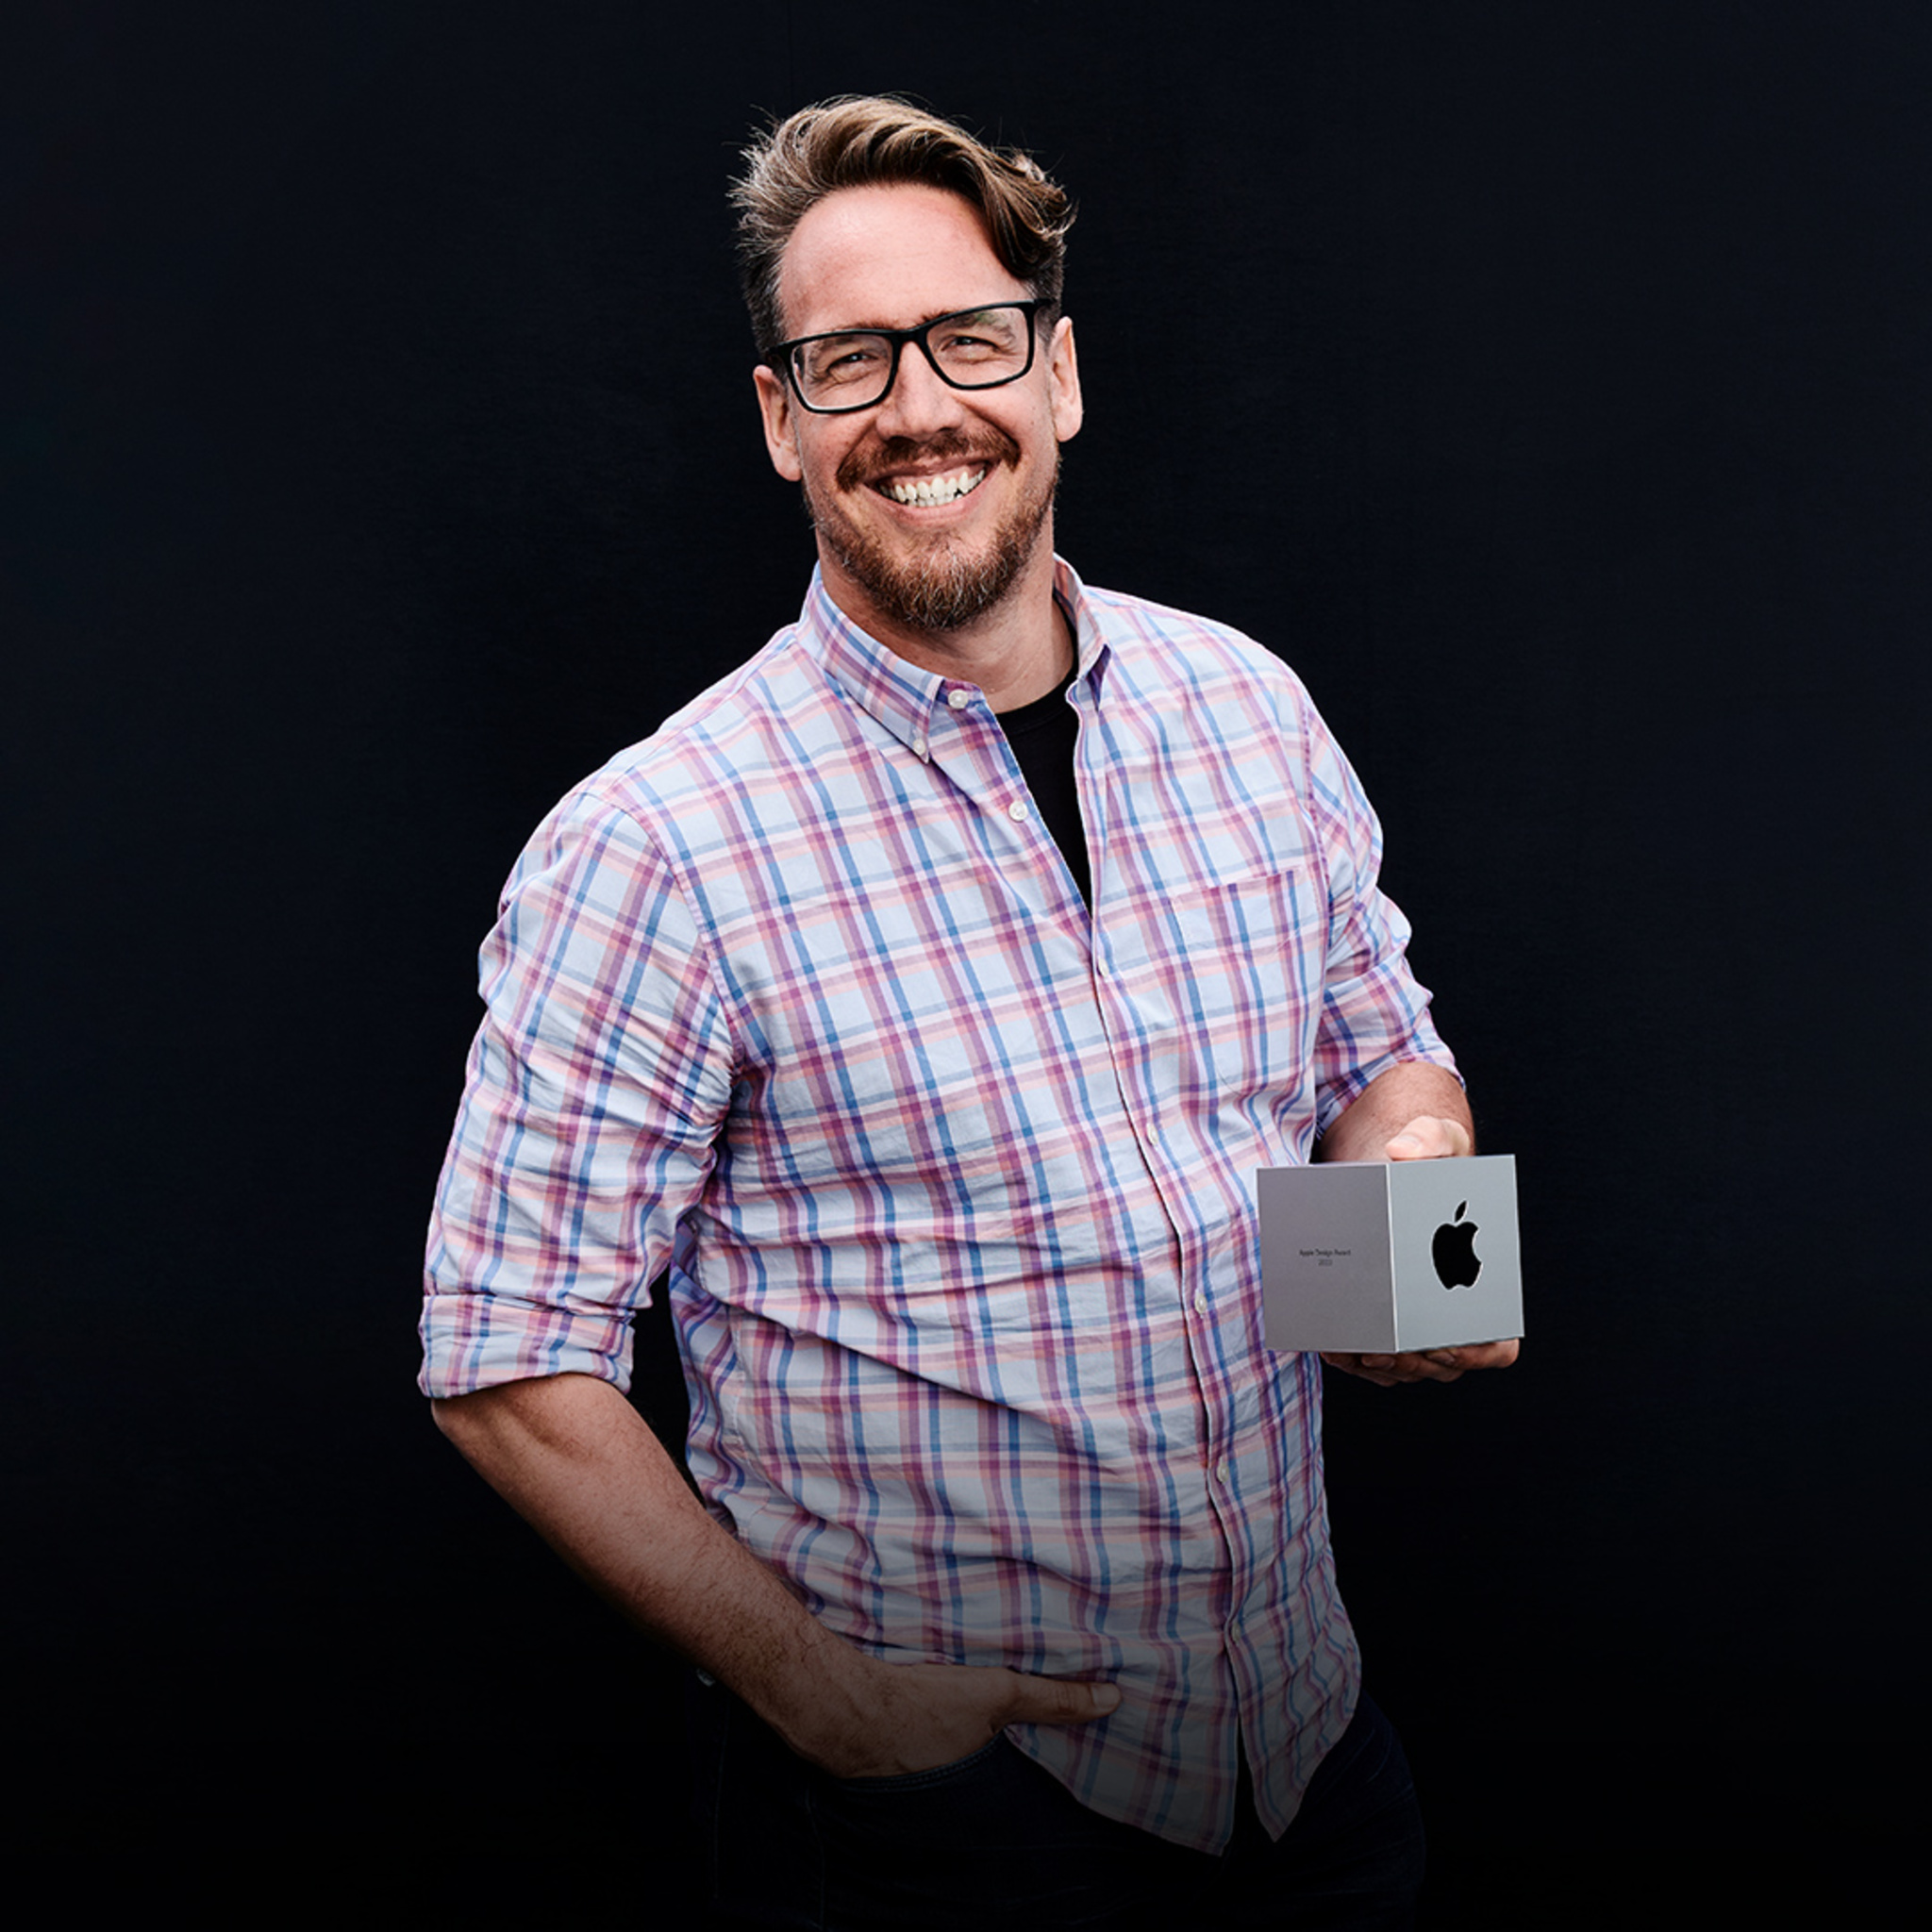 A portrait of Ben Brode, creator of MARVEL SNAP, holding his Apple Design Award.